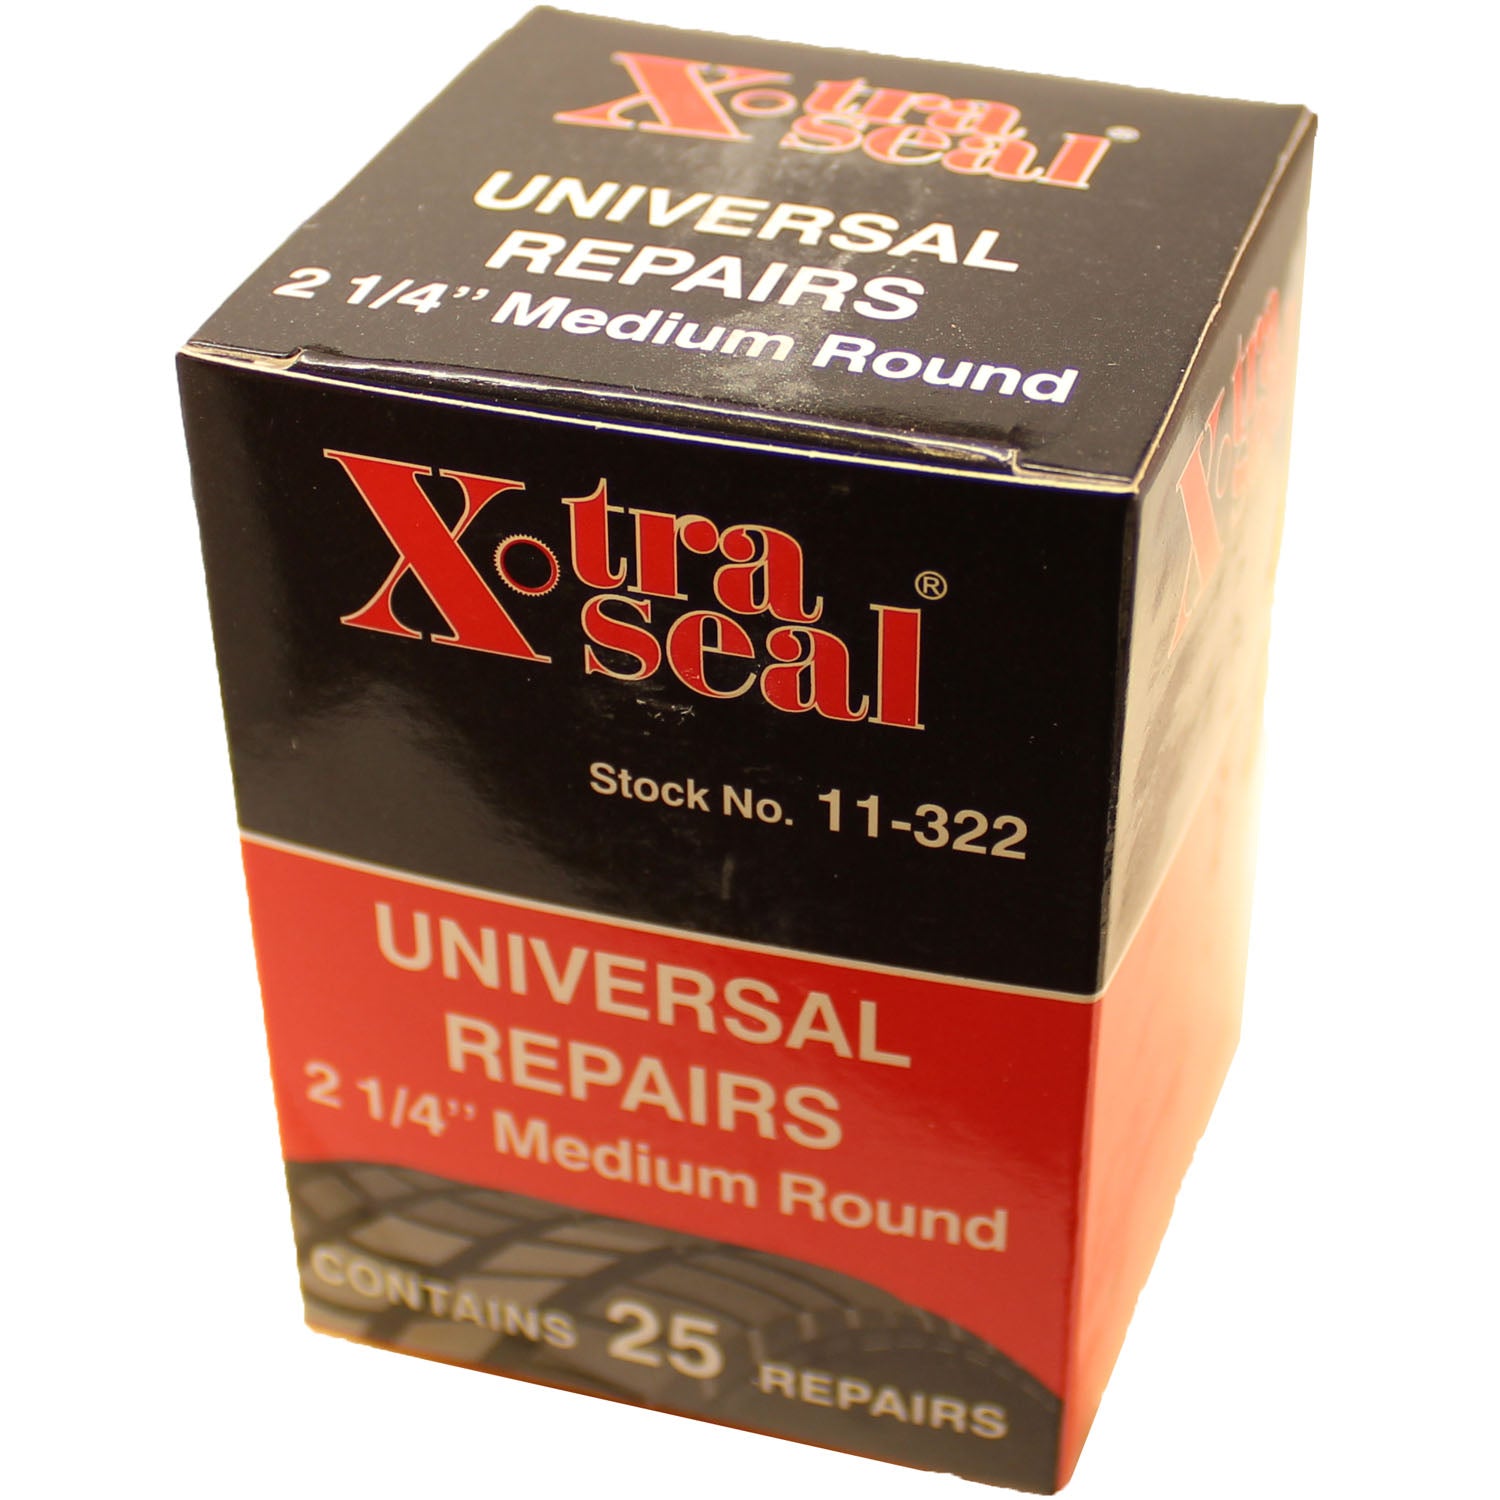 Xtra Seal 11-322 Medium Round 2-1/4" Universal Tire Repair Patch Box of 25